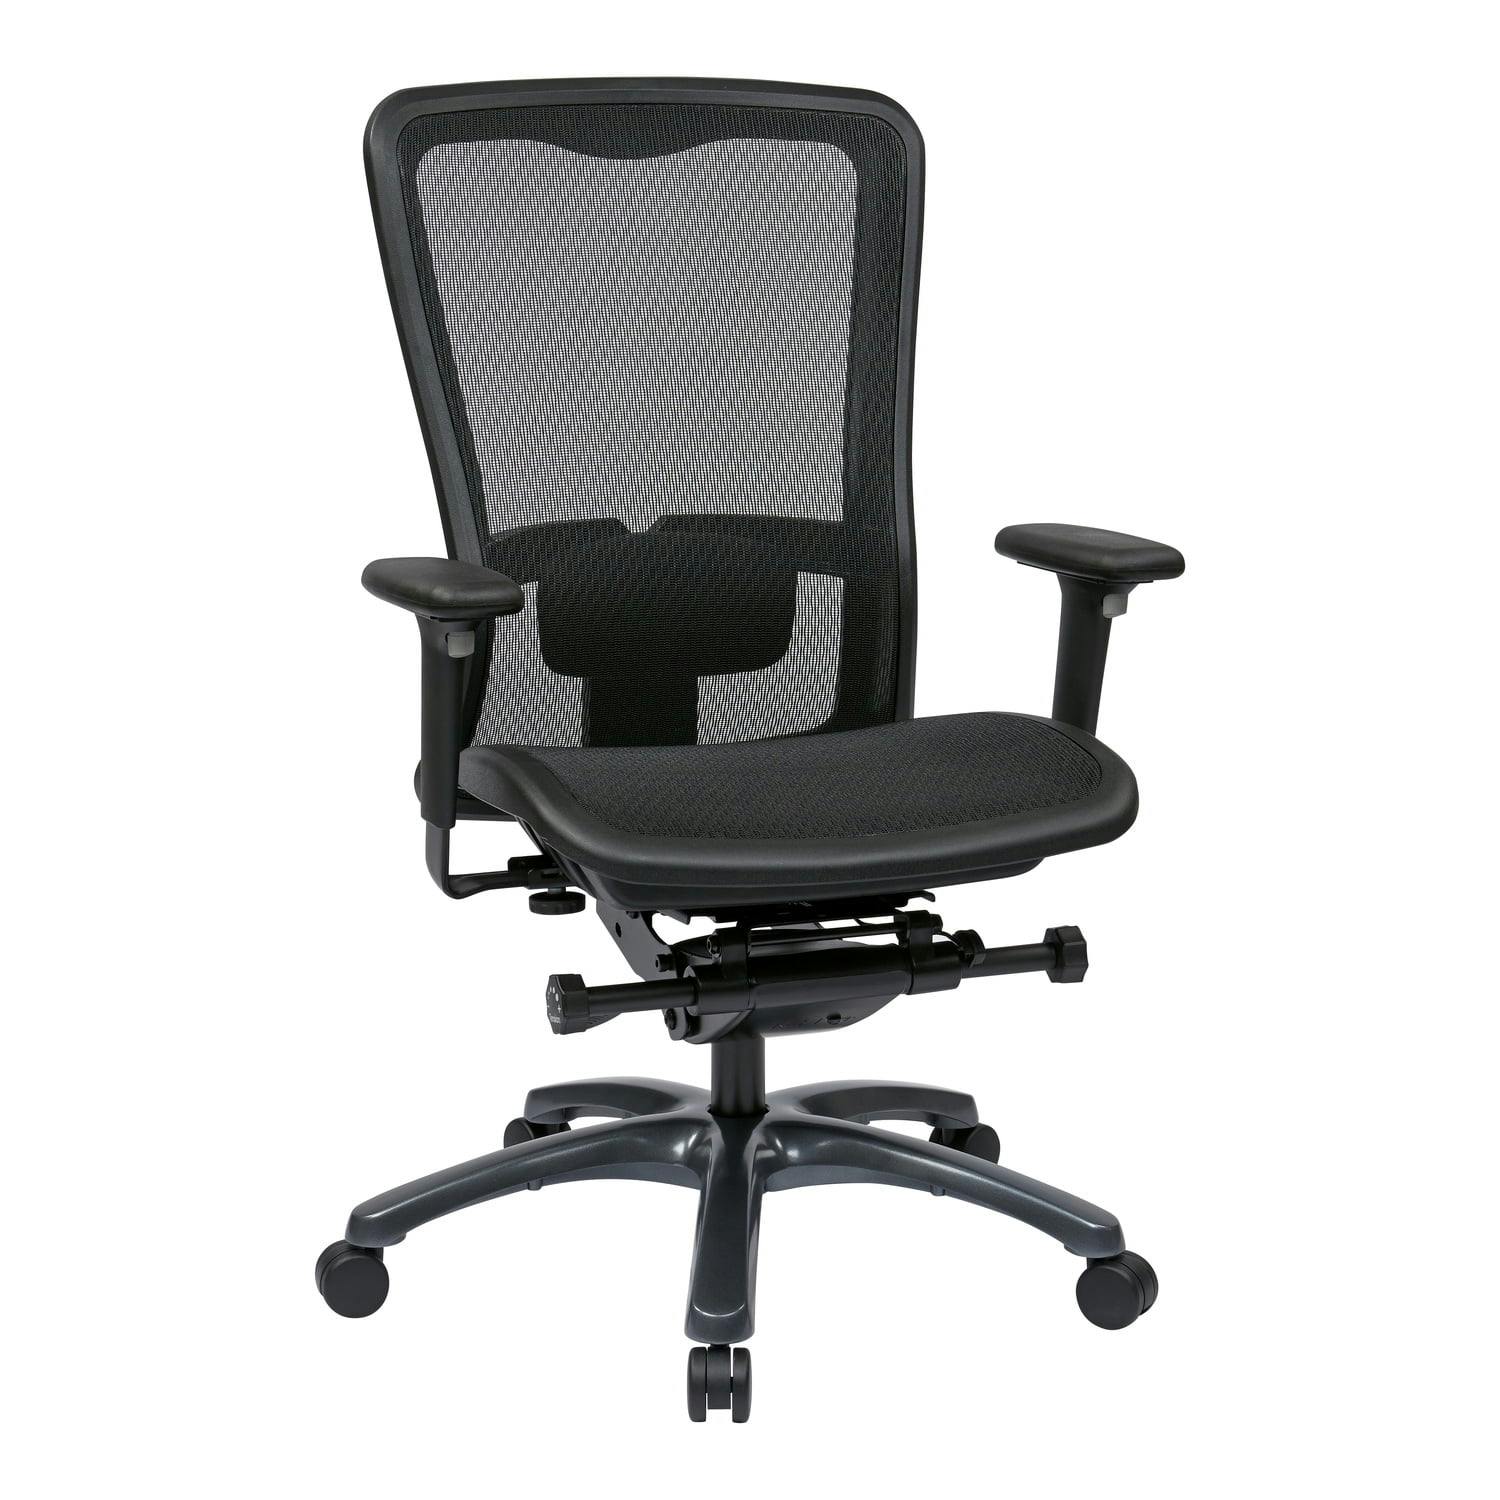 ErgoFlex Black Mesh High Back Executive Swivel Chair with Metal Base